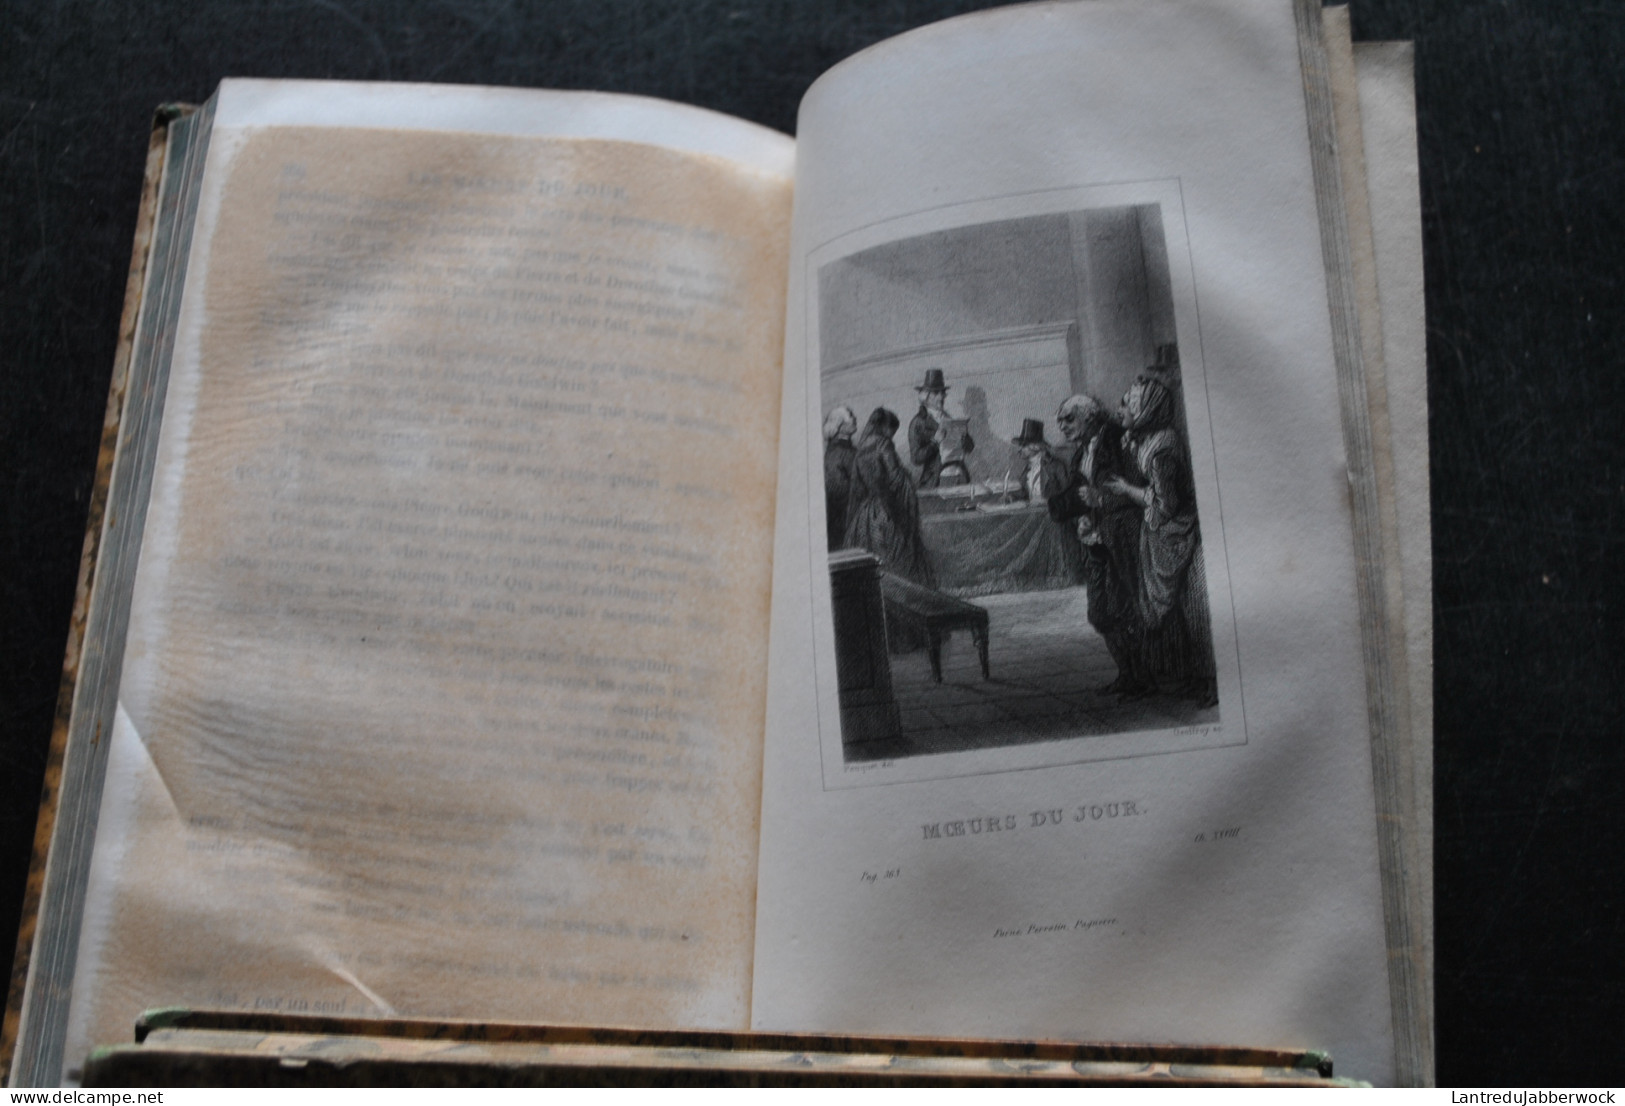 Oeuvres de James Fenimore Cooper Traduction DEFAUCONPRET 1830 - 1852 - INCOMPLET 27/30 VOLUMES reliures cuir